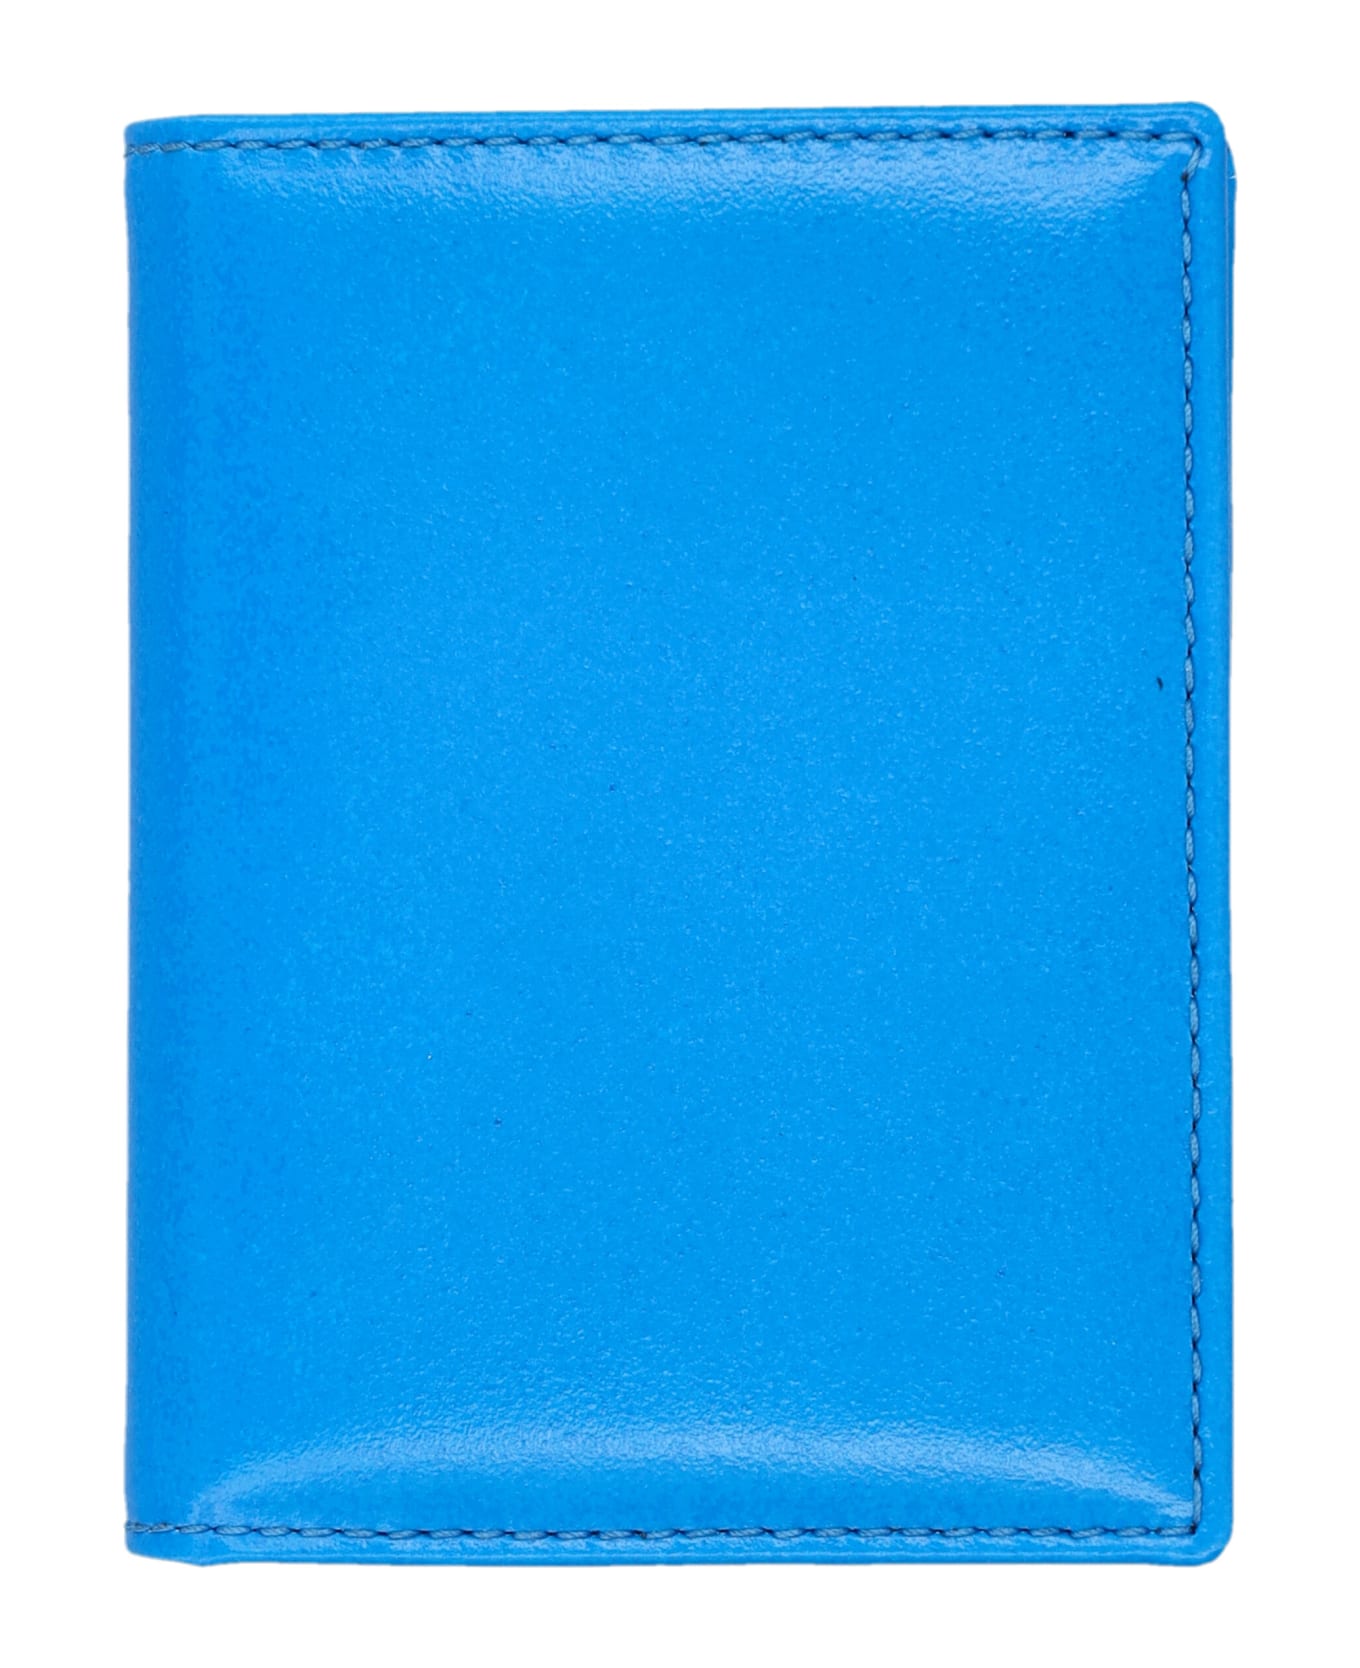 Comme des Garçons Wallet Super Fluo Cardholder - GREEN/BLUE 財布